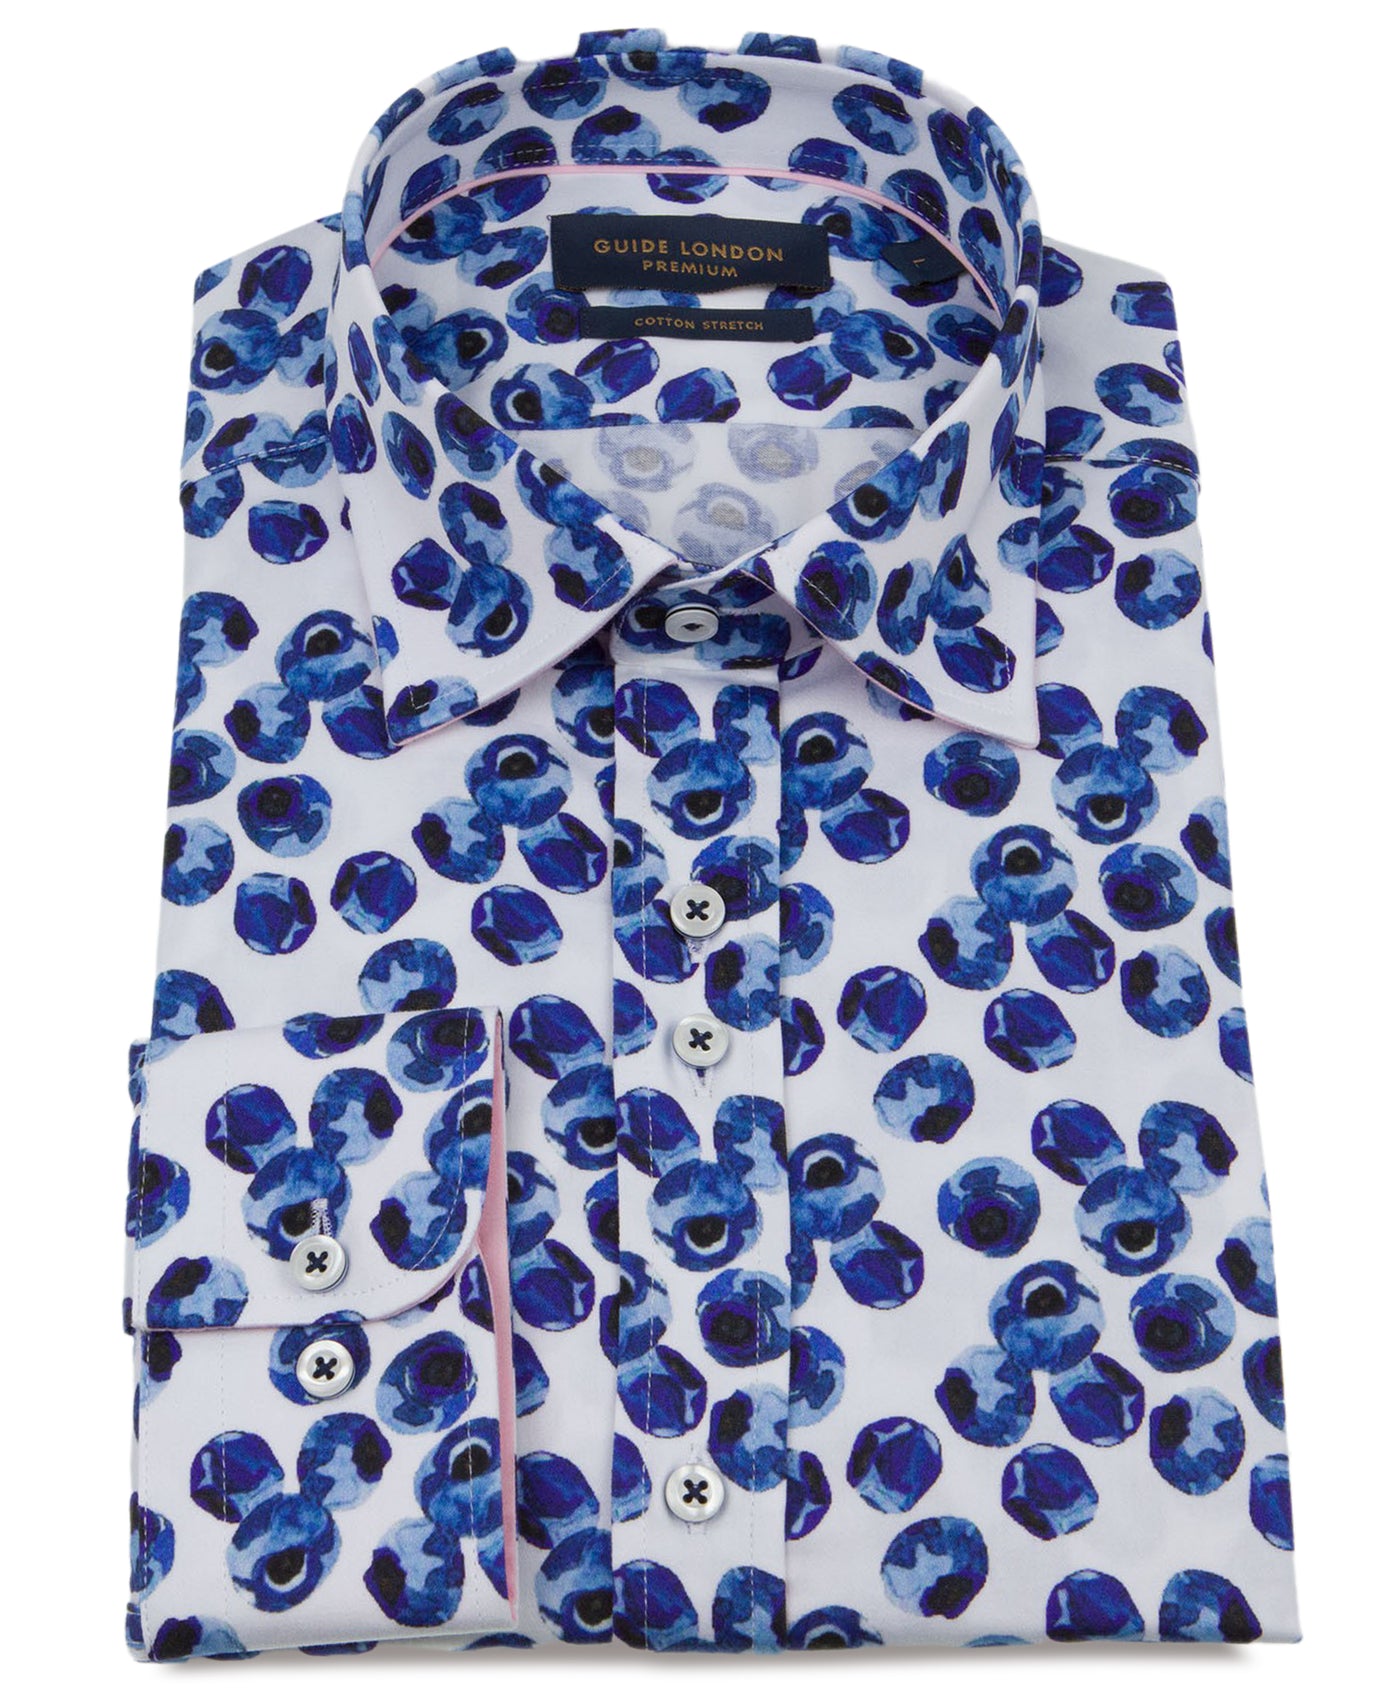 Bluberry print long sleeve shirt